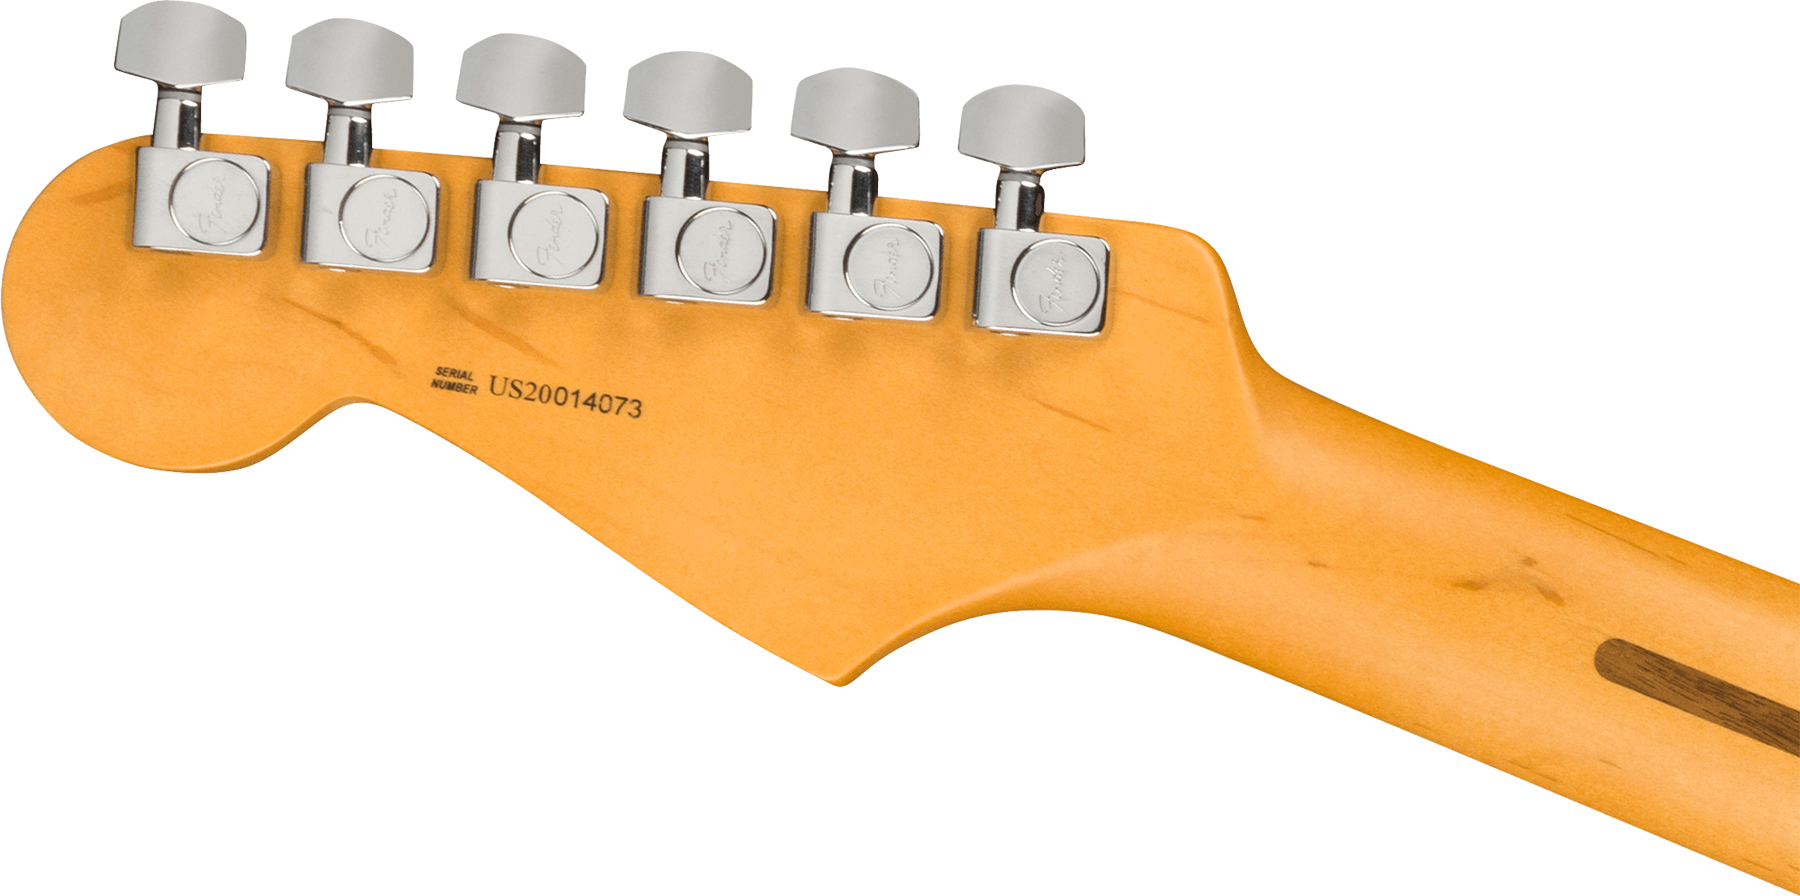 Fender Strat American Professional Ii Usa Rw - Roasted Pine - Str shape electric guitar - Variation 3